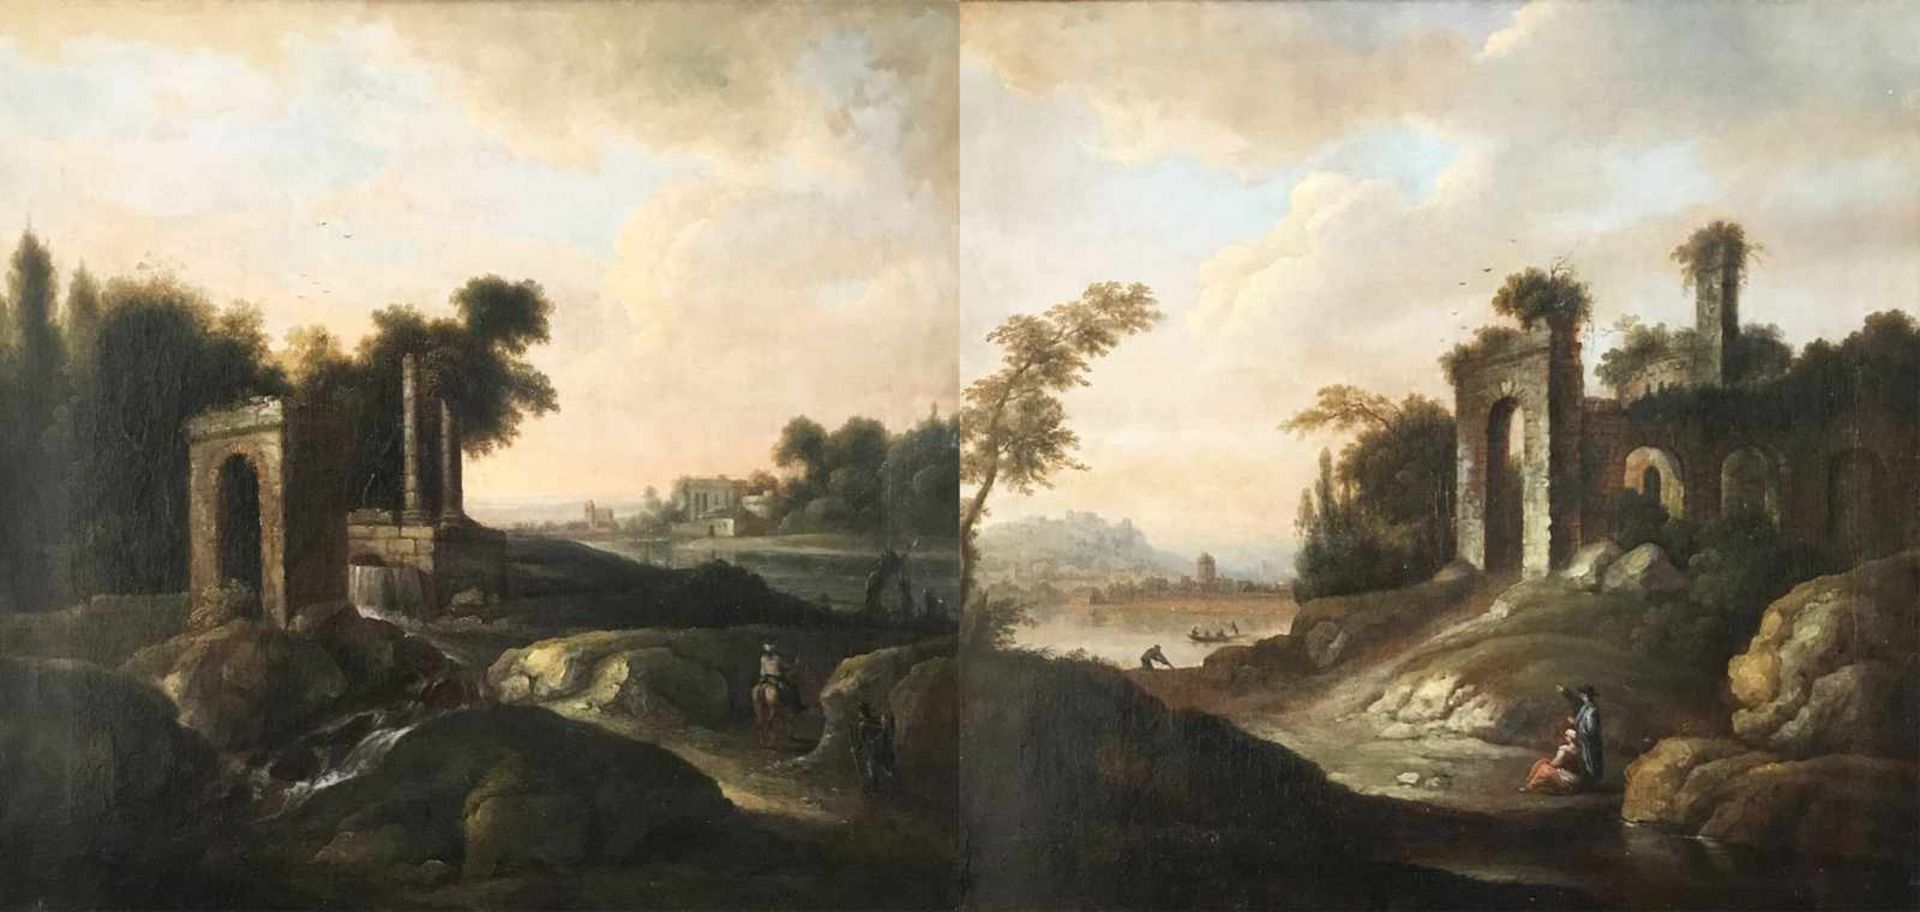 Paar italienische Landschaften, 18. Jh. Öl/Lwd. (aufgez.), 62 x 65 cm. Neben Ruinen im felsigen